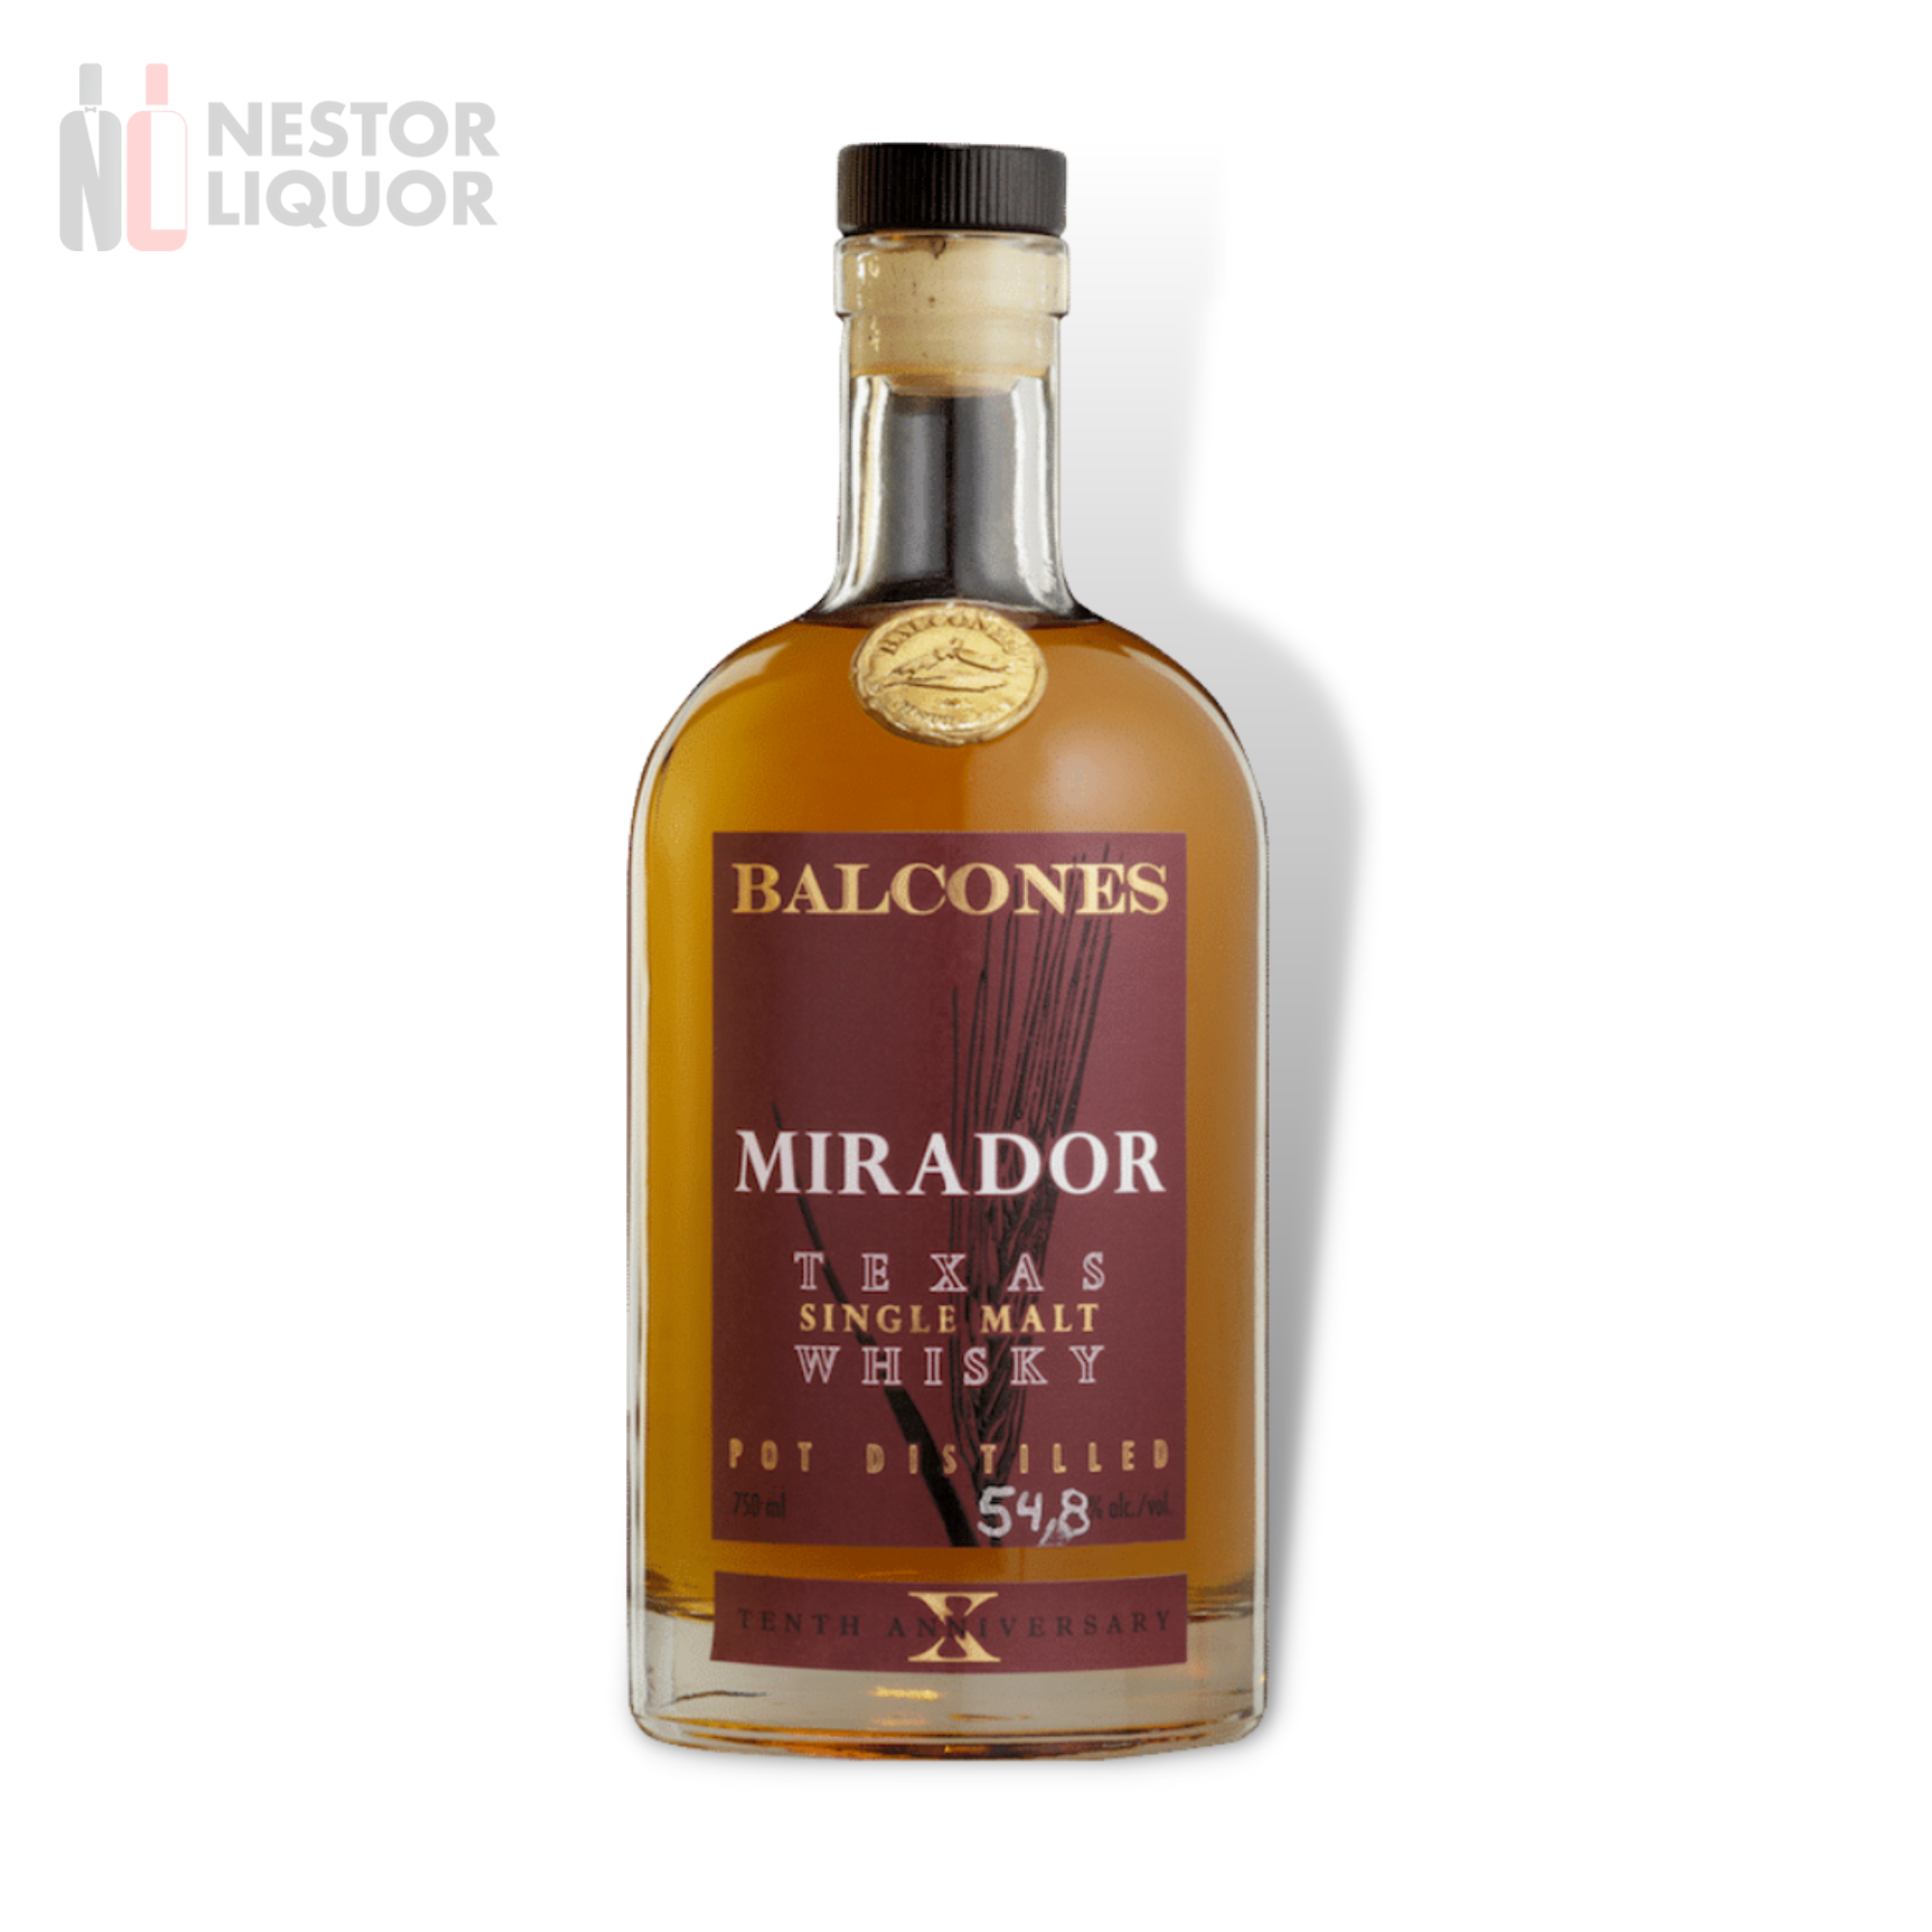 Balcones Mirador Texas Single Malt Whisky 750ml_nestor liquor